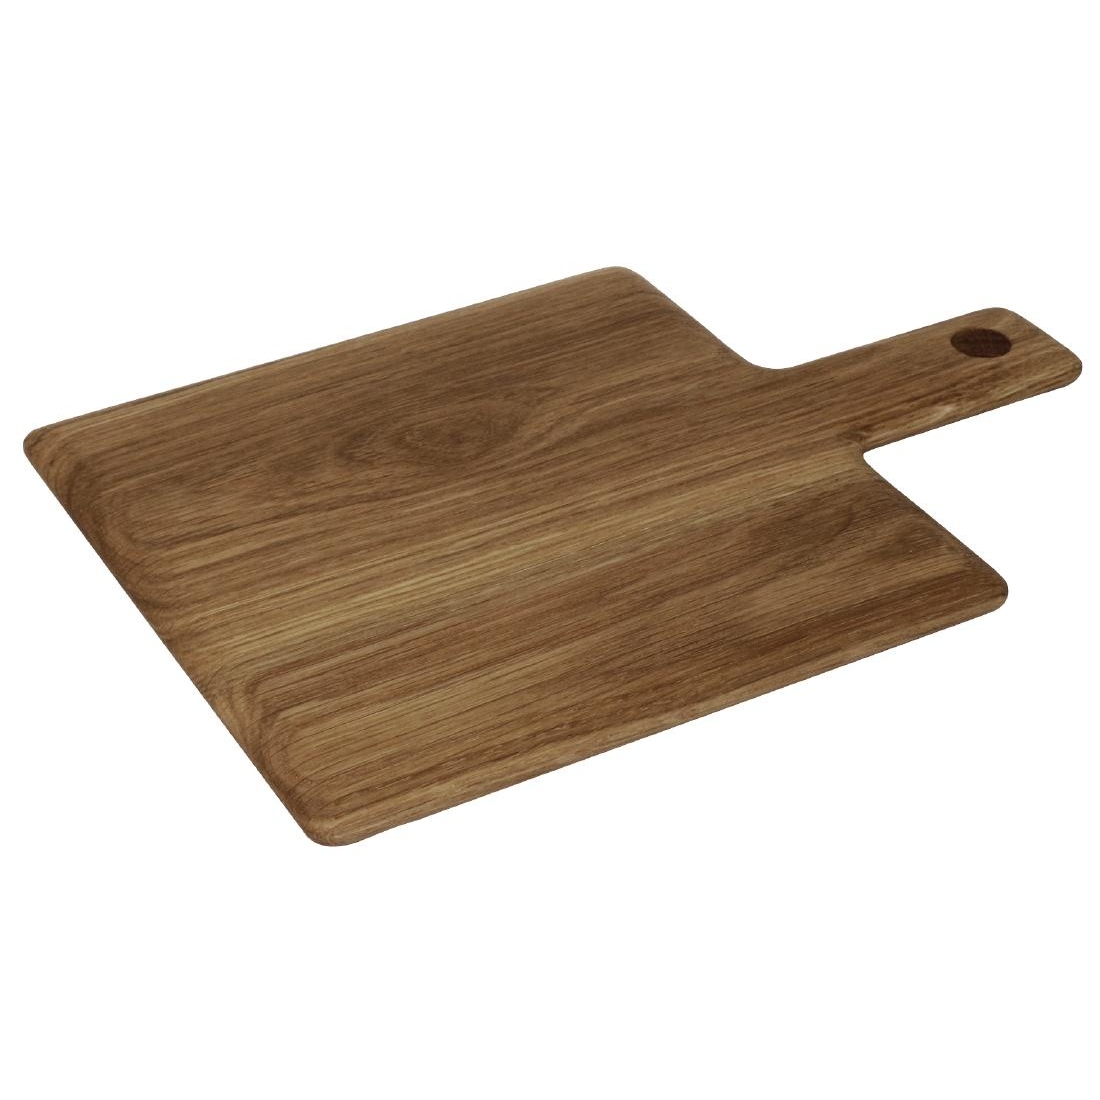 Olympia Oak Handled Wooden Board Small